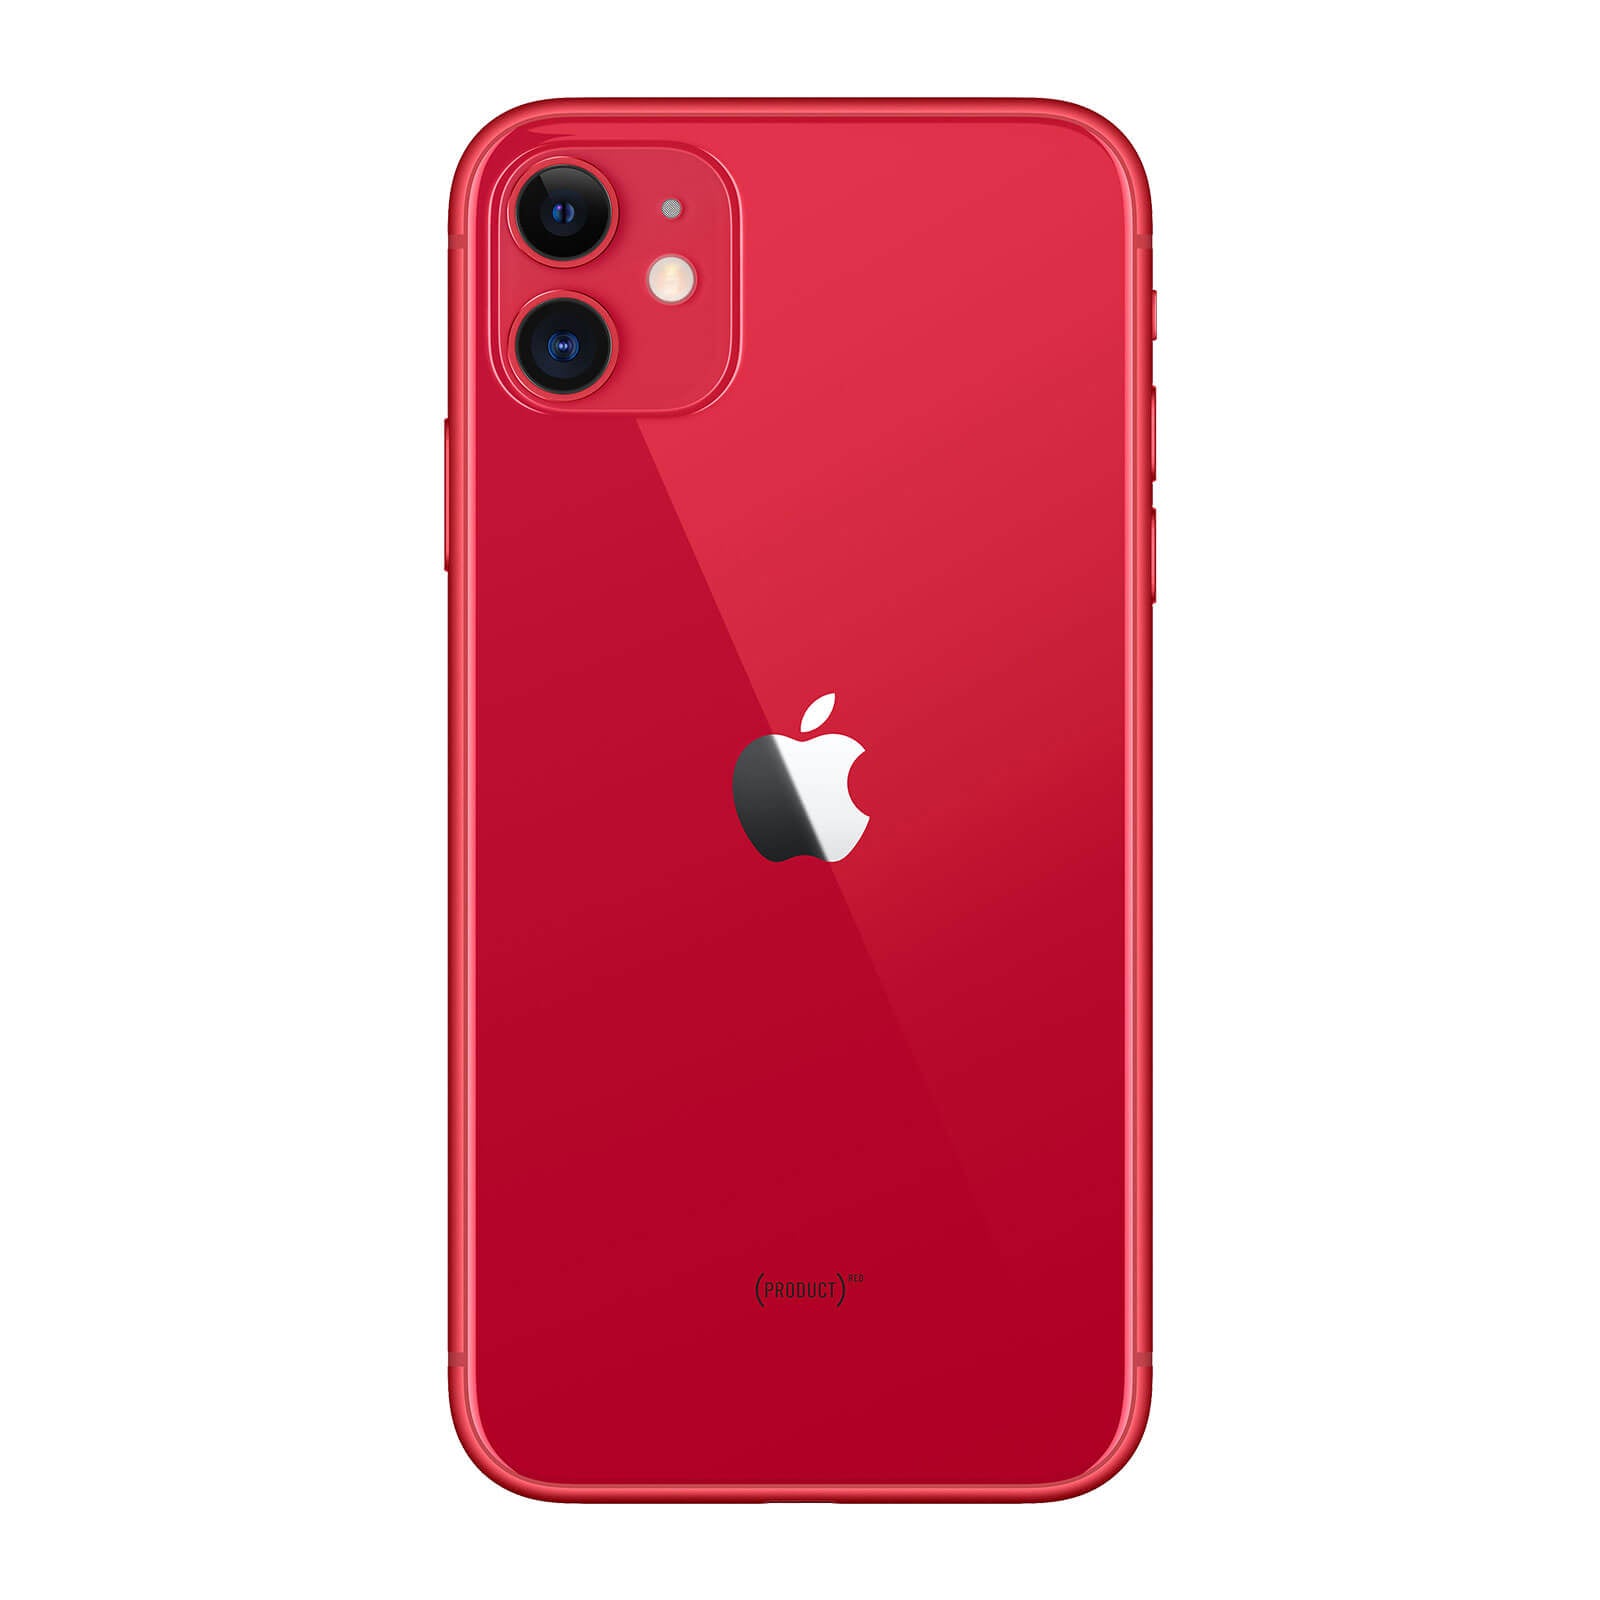 Apple iPhone 11 128GB Red Pristine - Unlocked